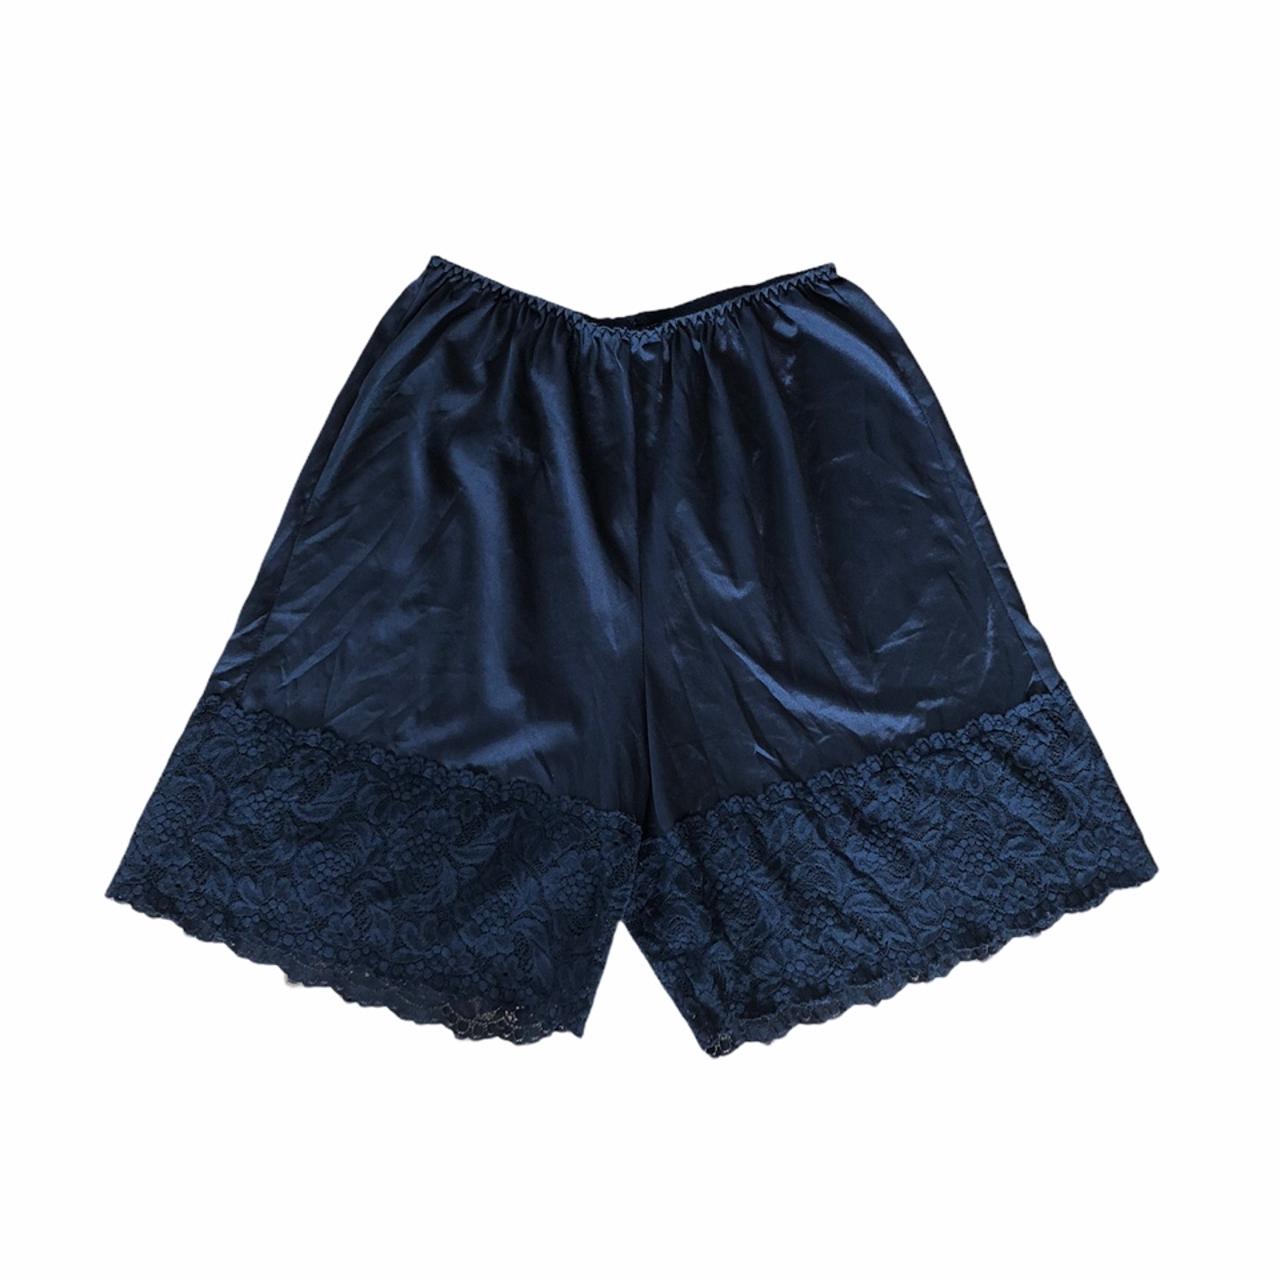 Vintage lace hem slip shorts by Illusion 🖤 elastic - Depop